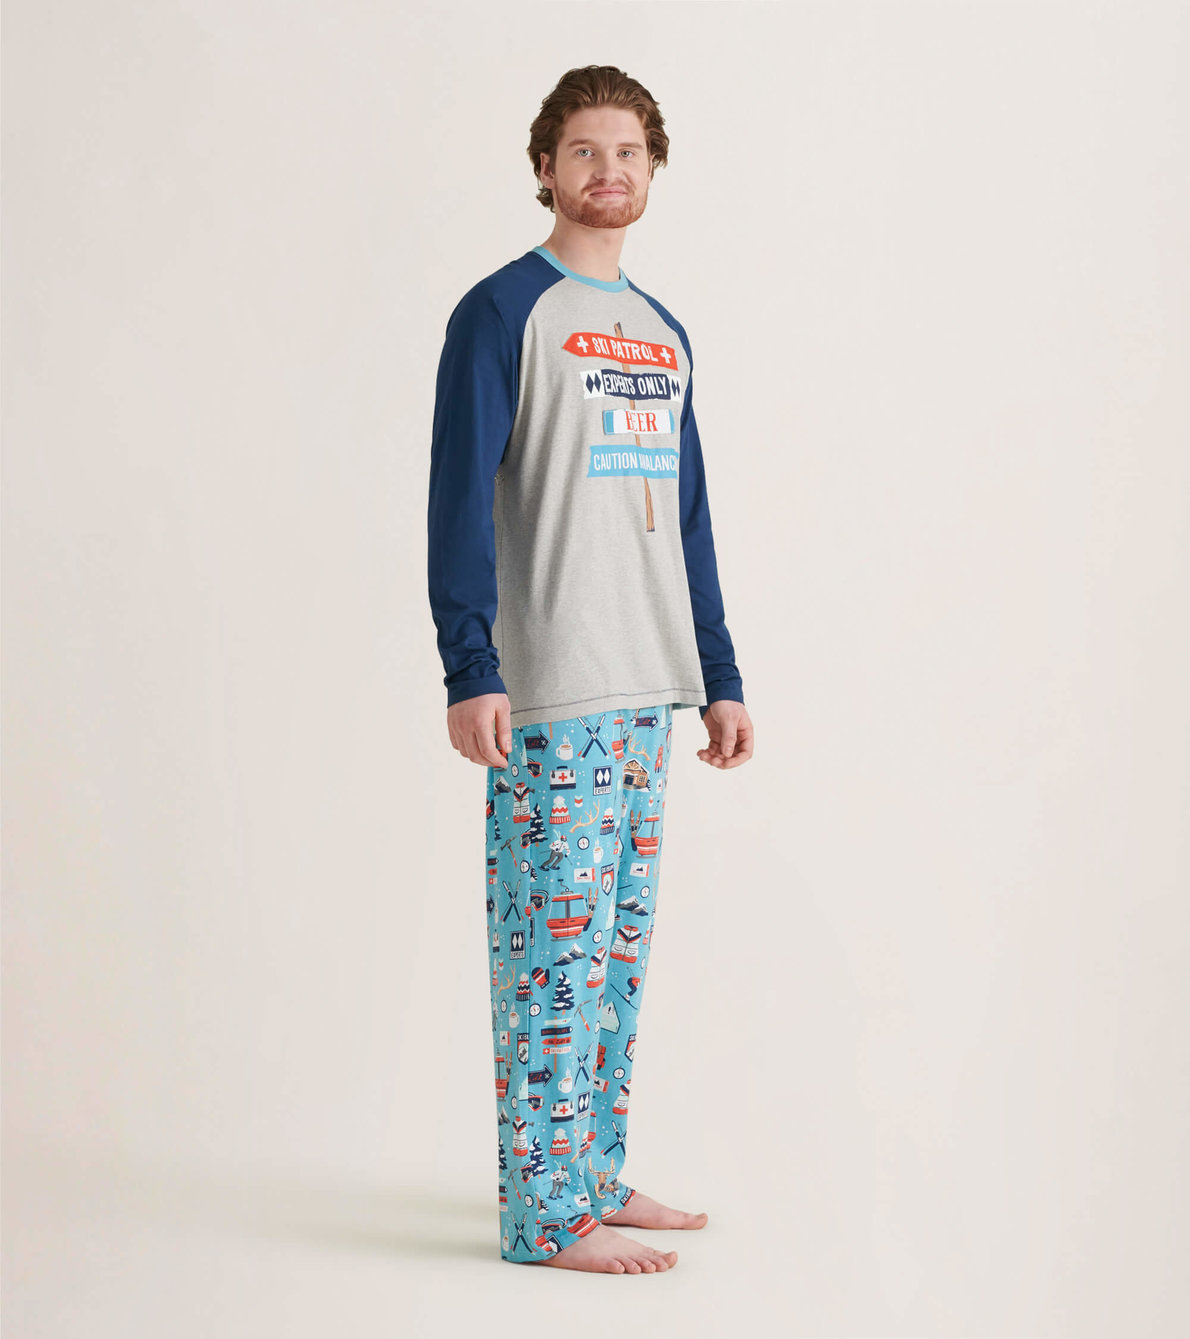 View larger image of Ski Holiday Men's Tee and Pants Pajamas Separates